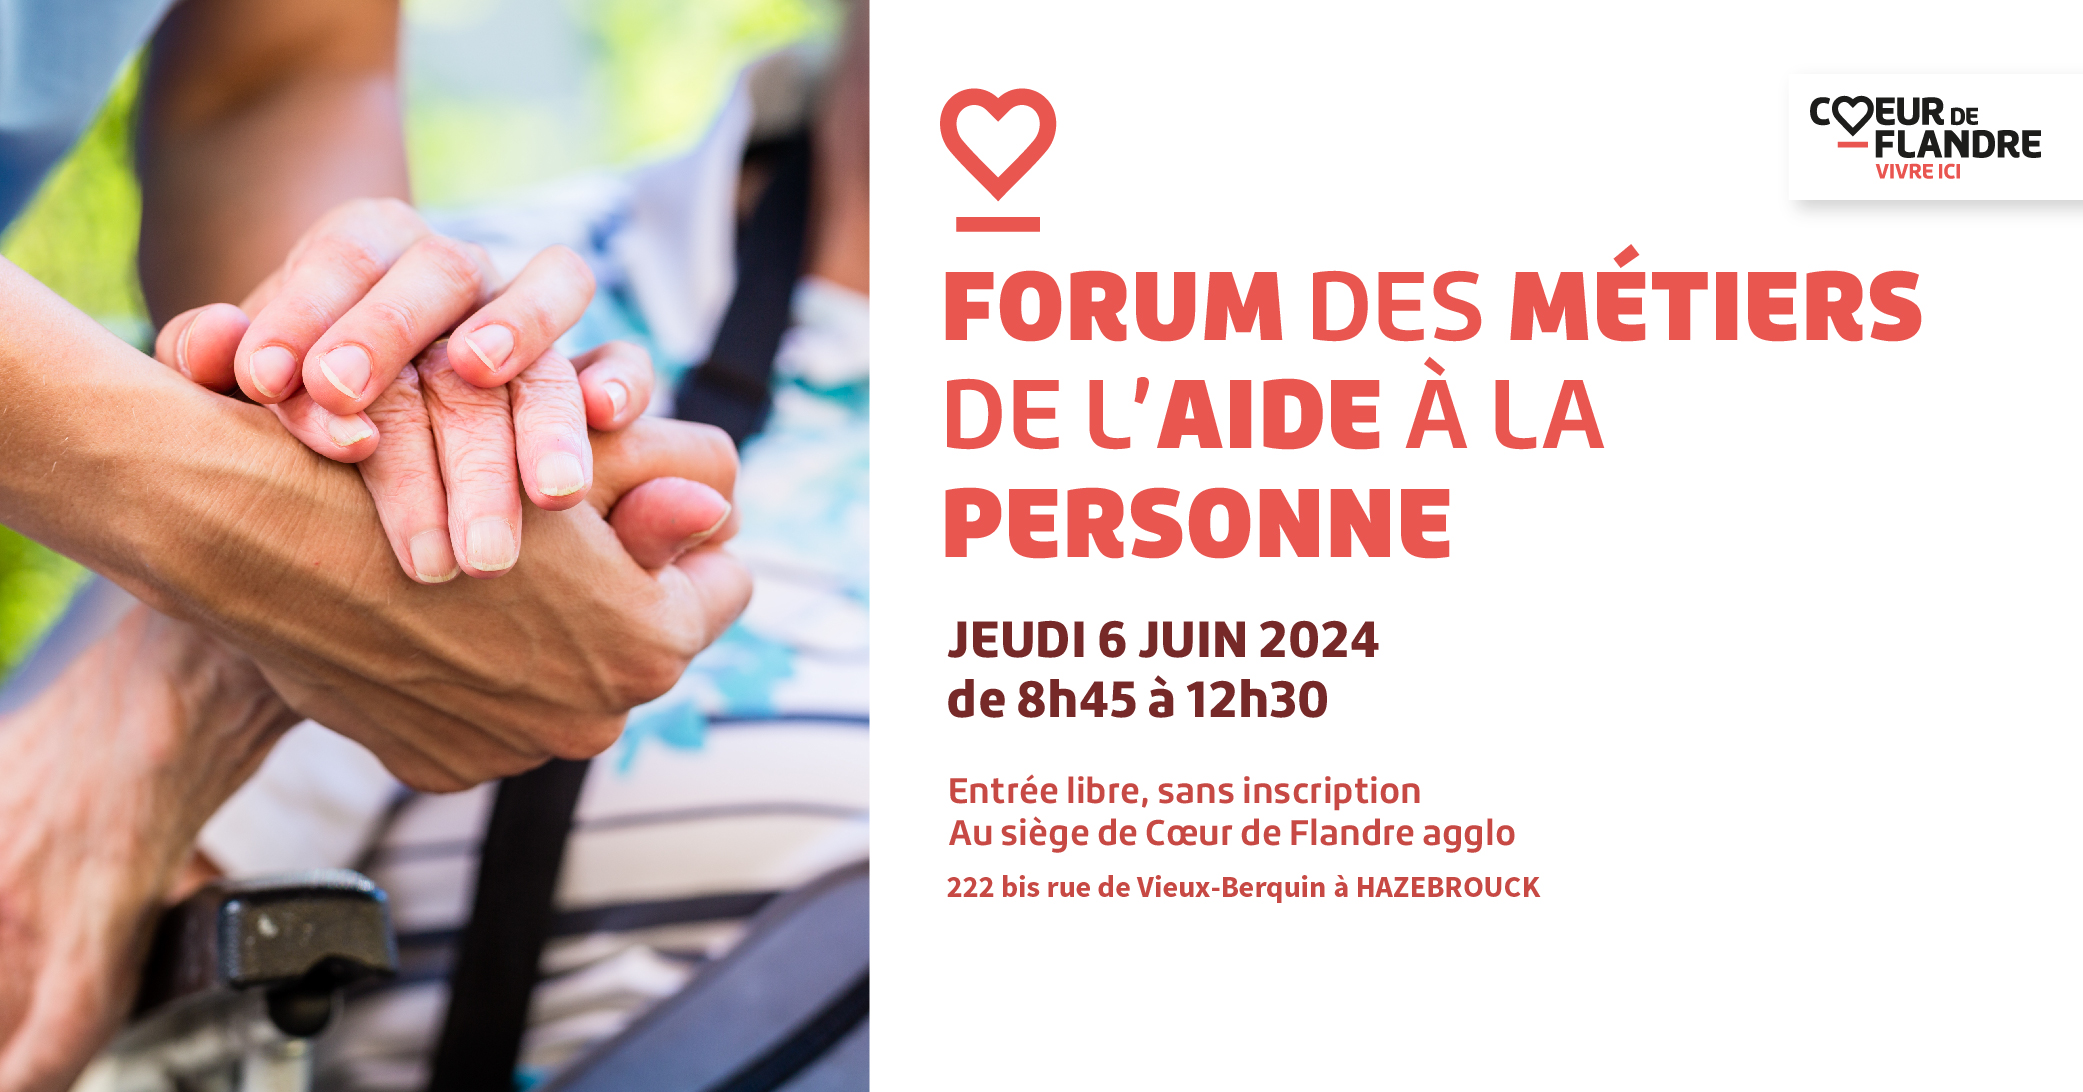 Forum des métiers 2024 - Event FB.jpg